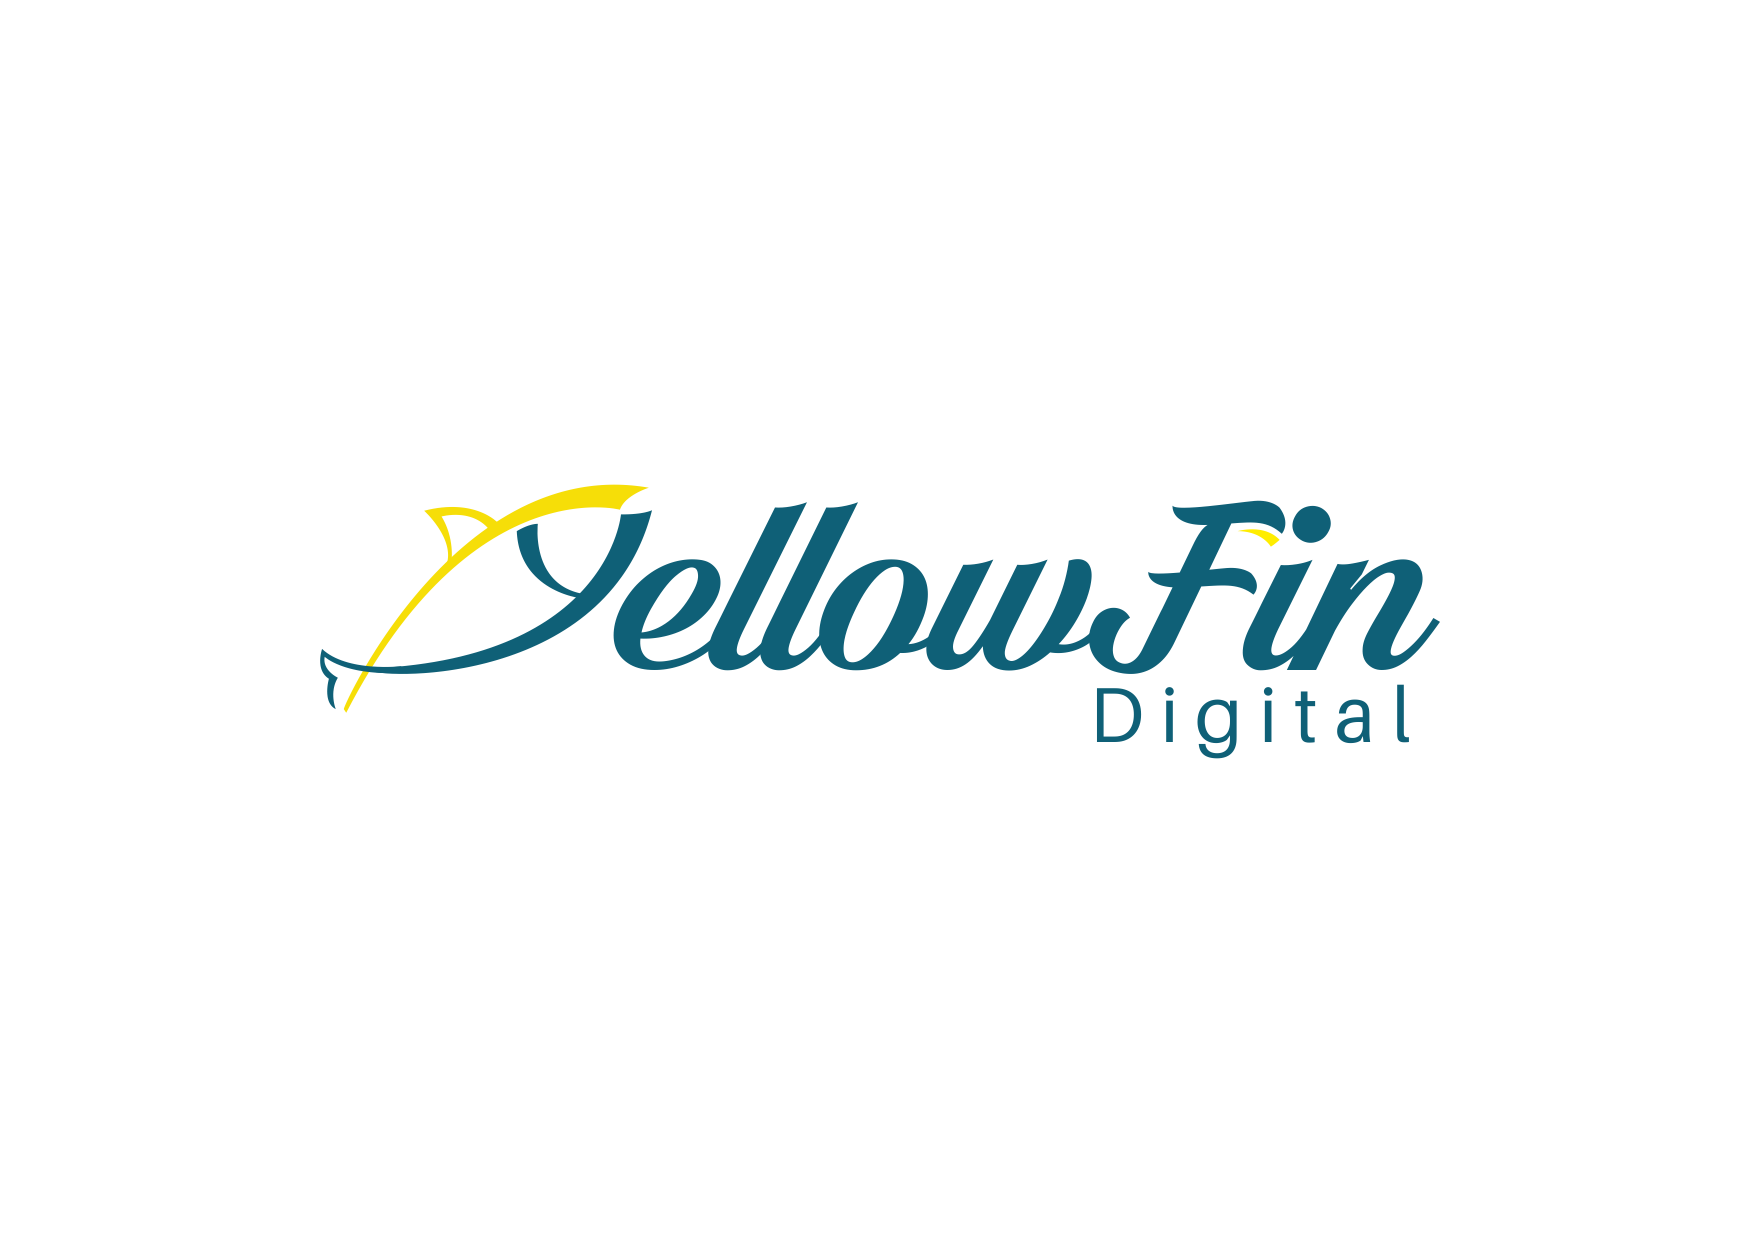 Best SEO Firm Logo: YellowFin Digital